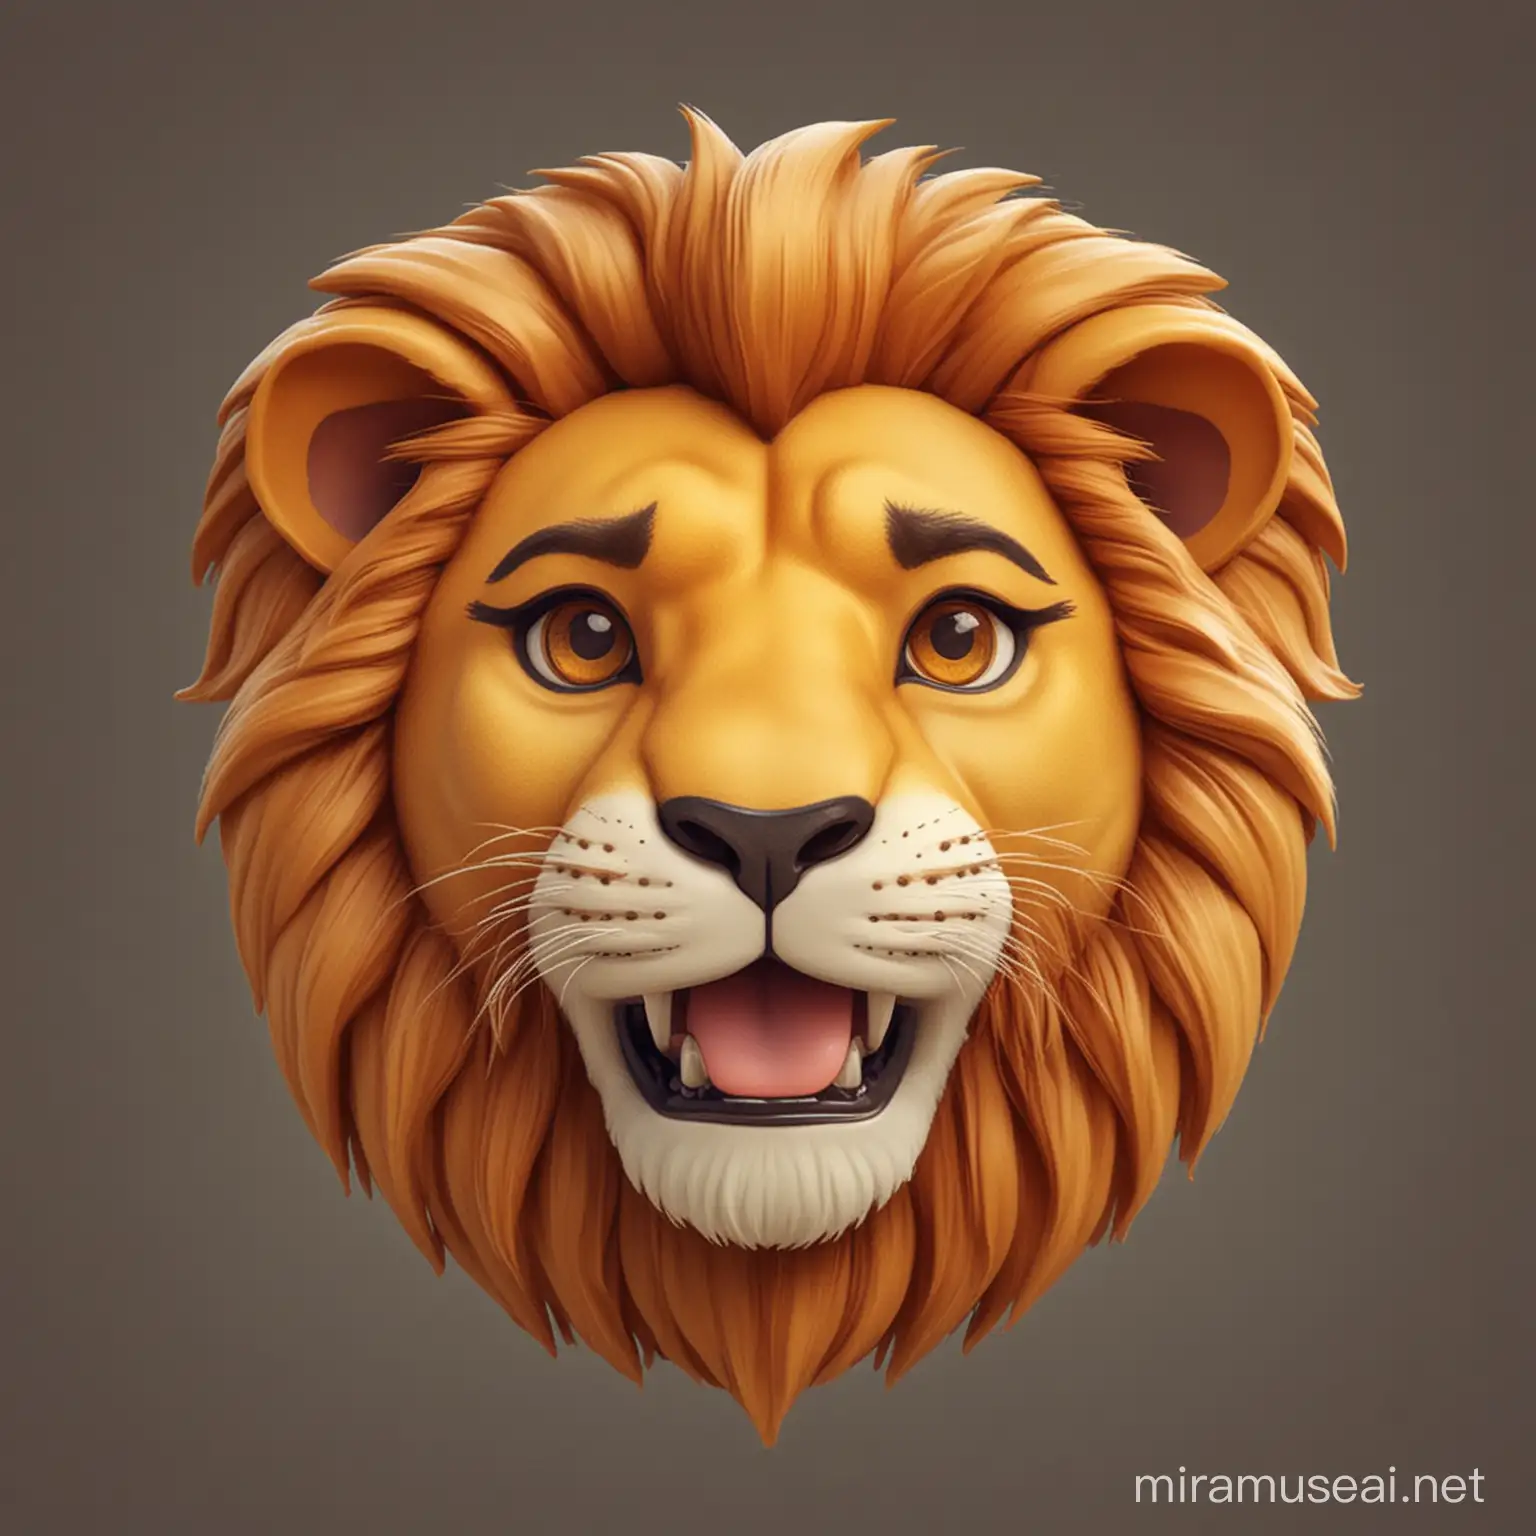 Roaring Lion Emoji in Vibrant Sunset Sky